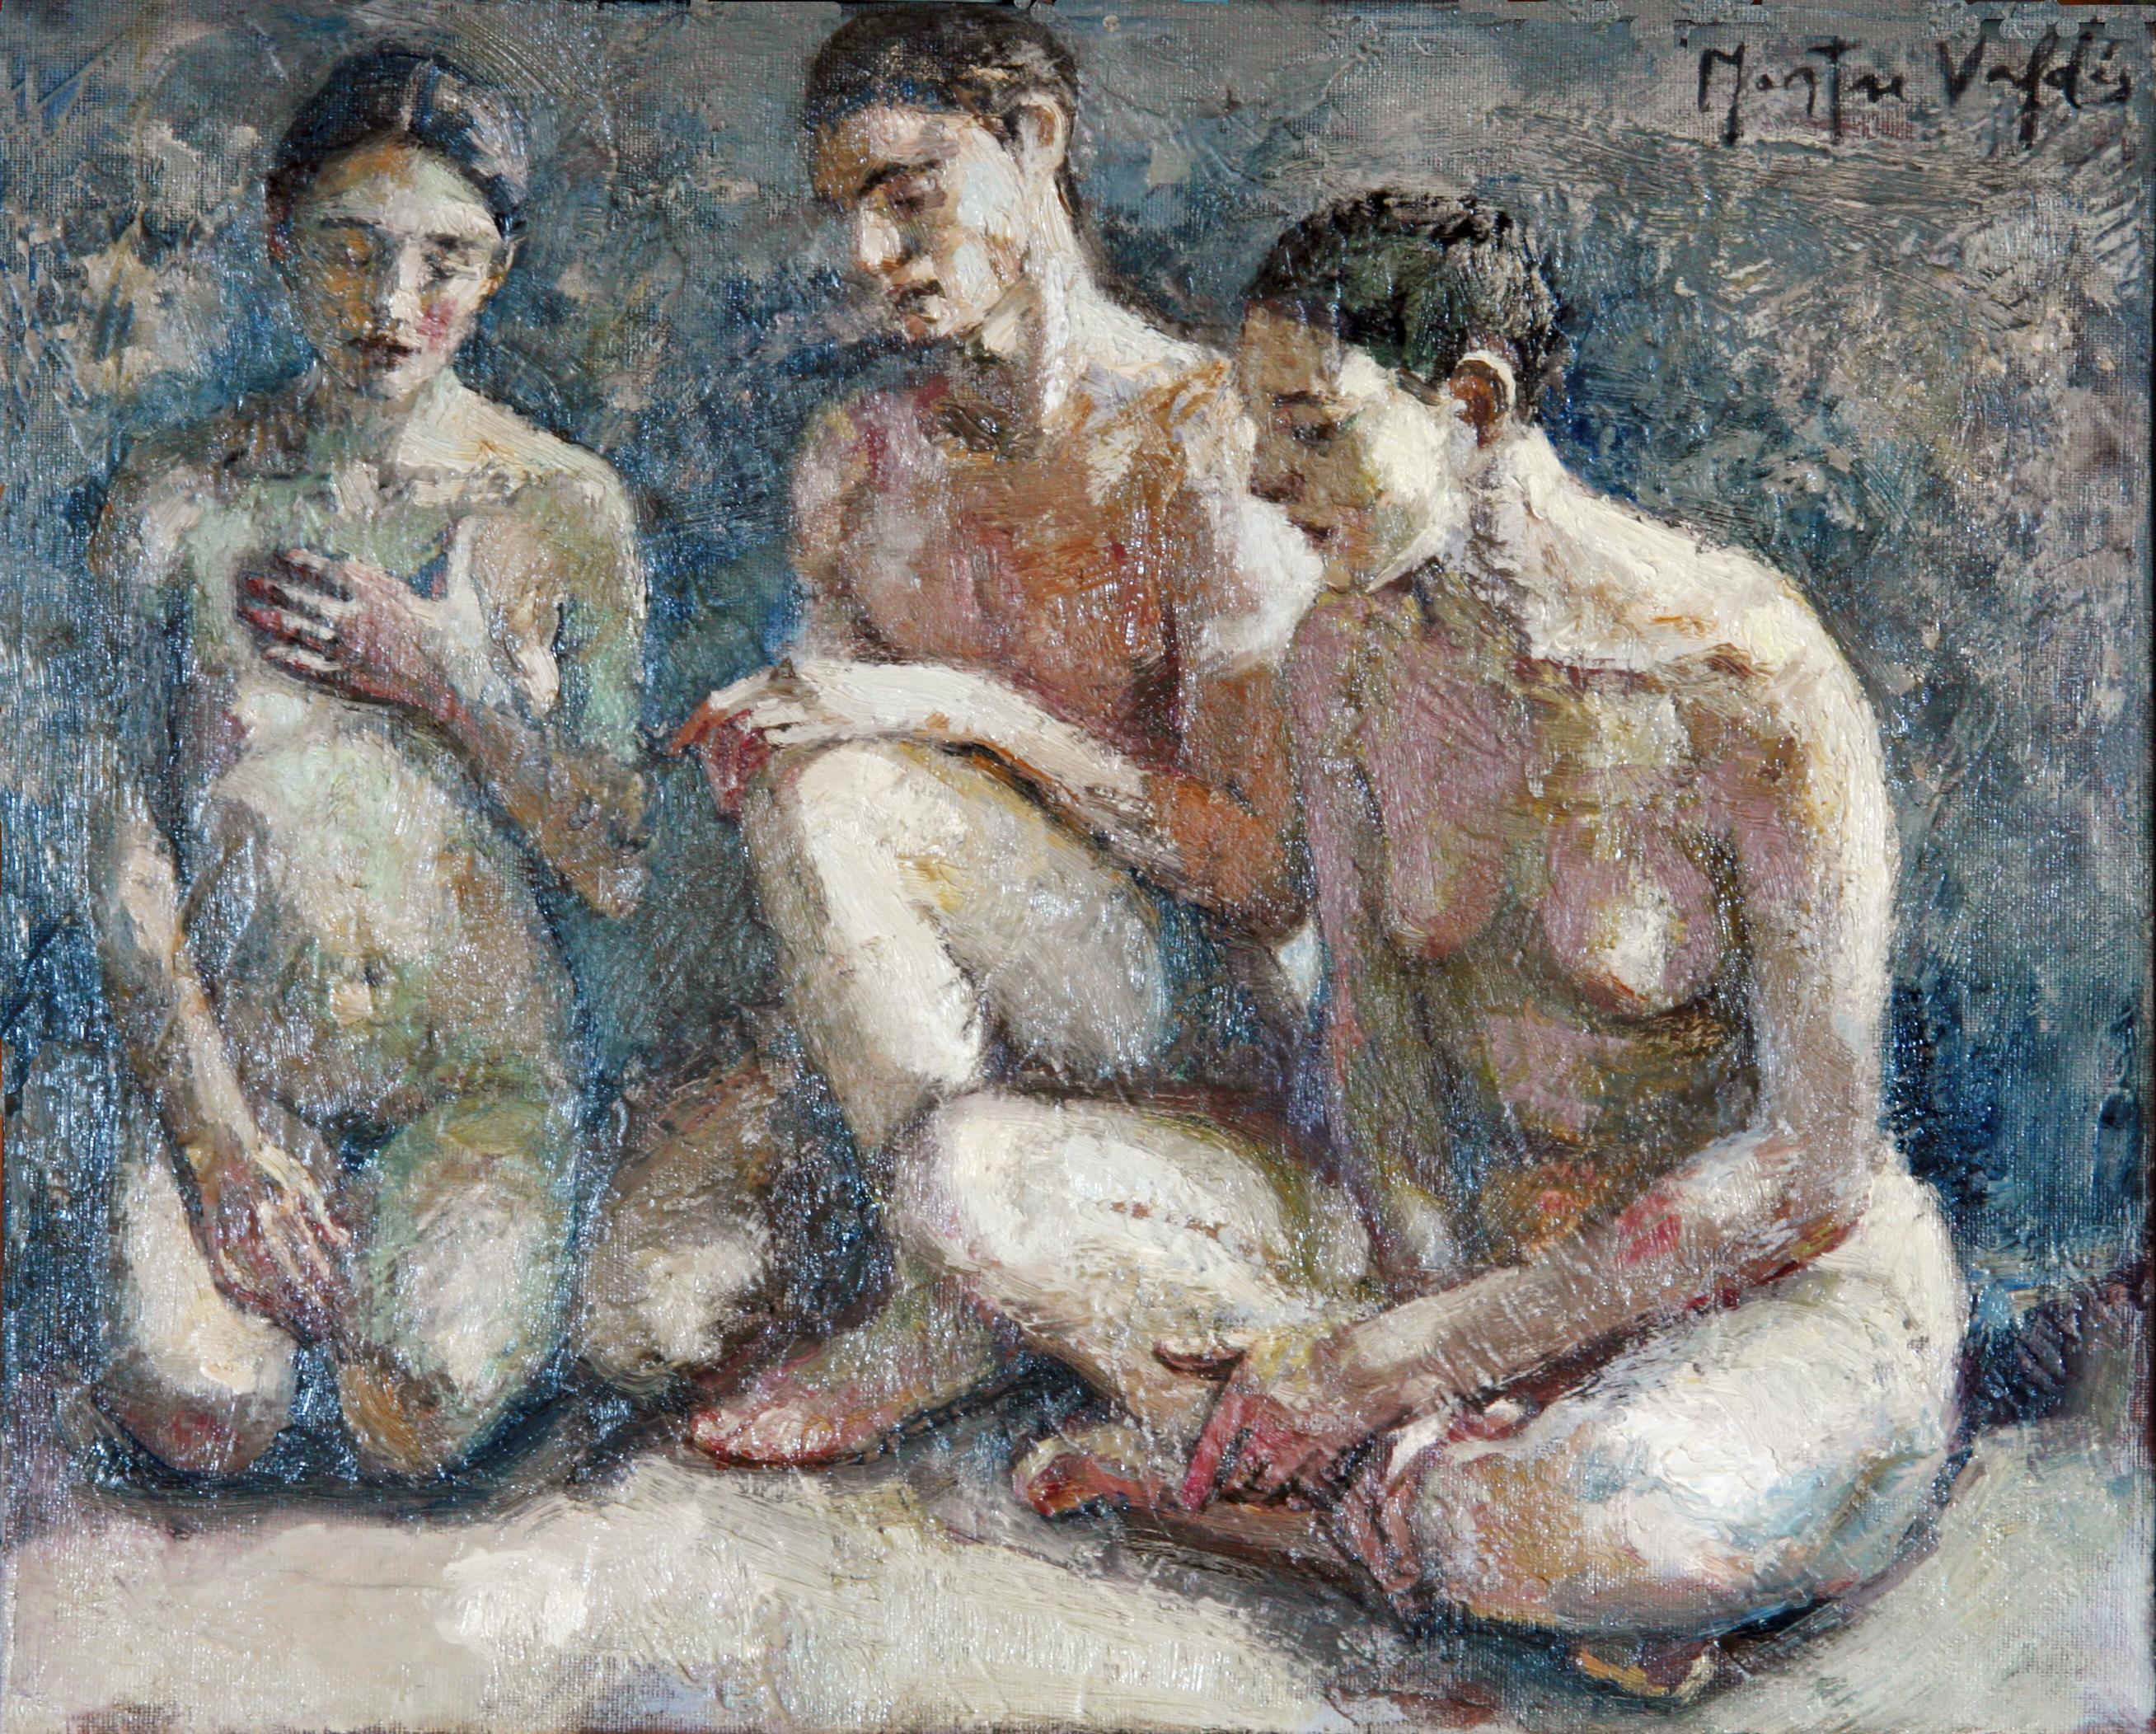 Montse Valdés Portrait Painting - 4-11-11 - 21st Century, Contemporary, Nude Painting, Oil on Canvas